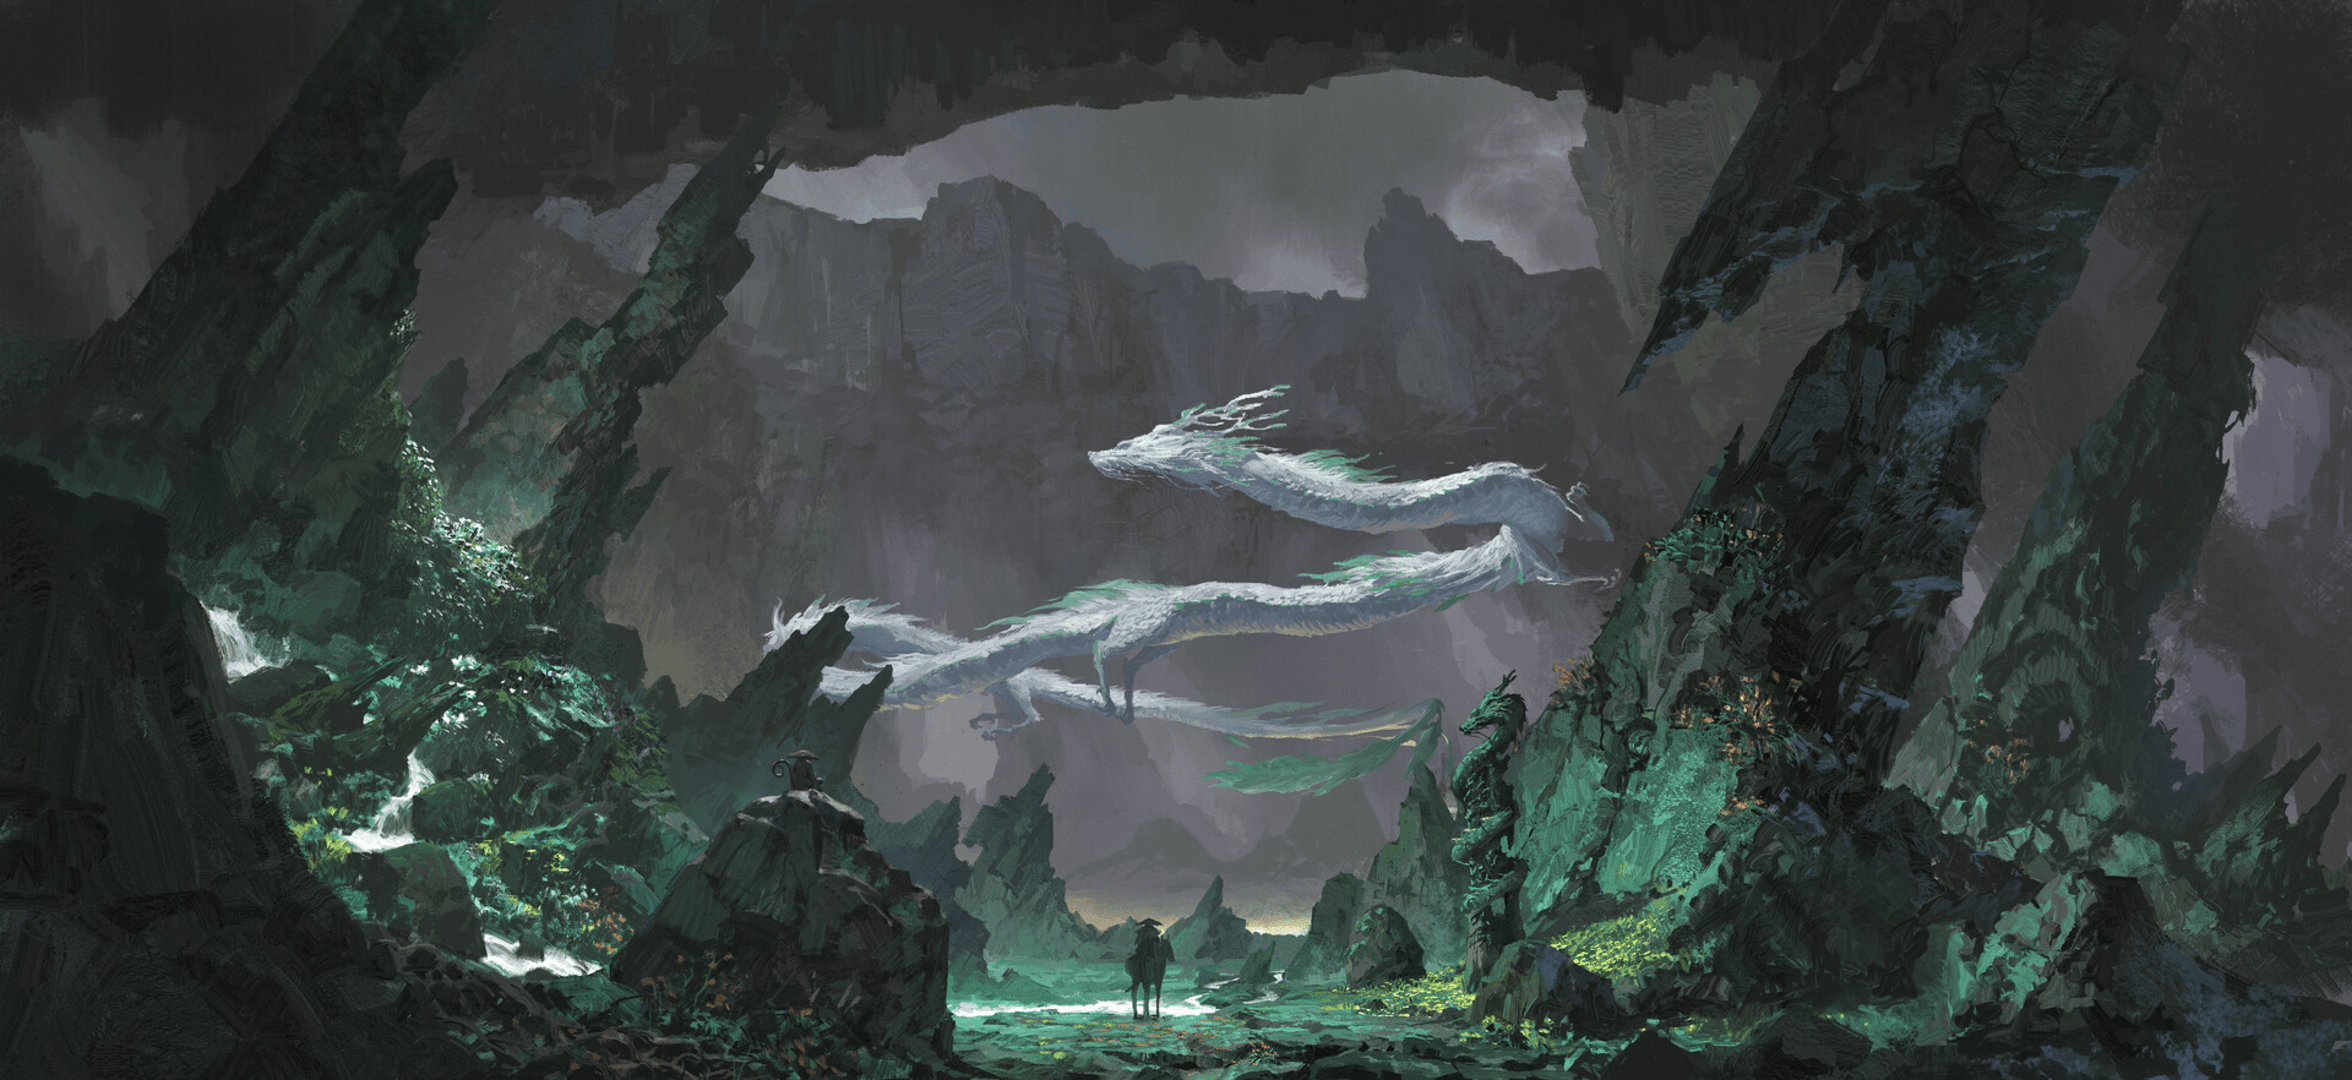 Digital Art Artwork Illustration Dragon Fantasy Art Rock Formation Loong Chinese Dragon Creature 2352x1080